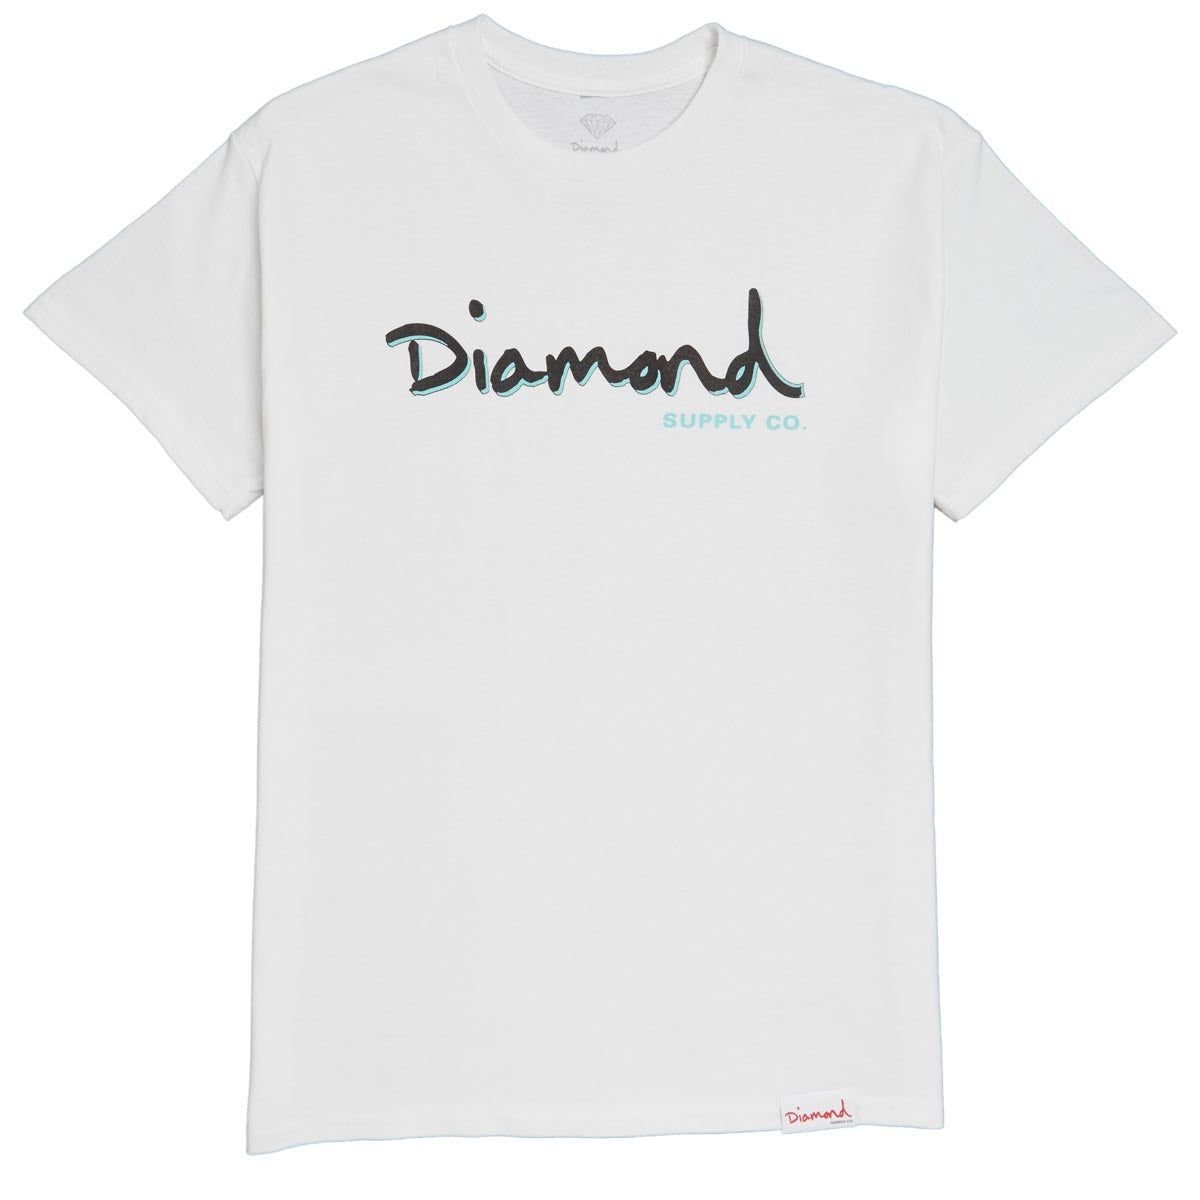 Diamond Supply Co. Outline T-Shirt - White image 1